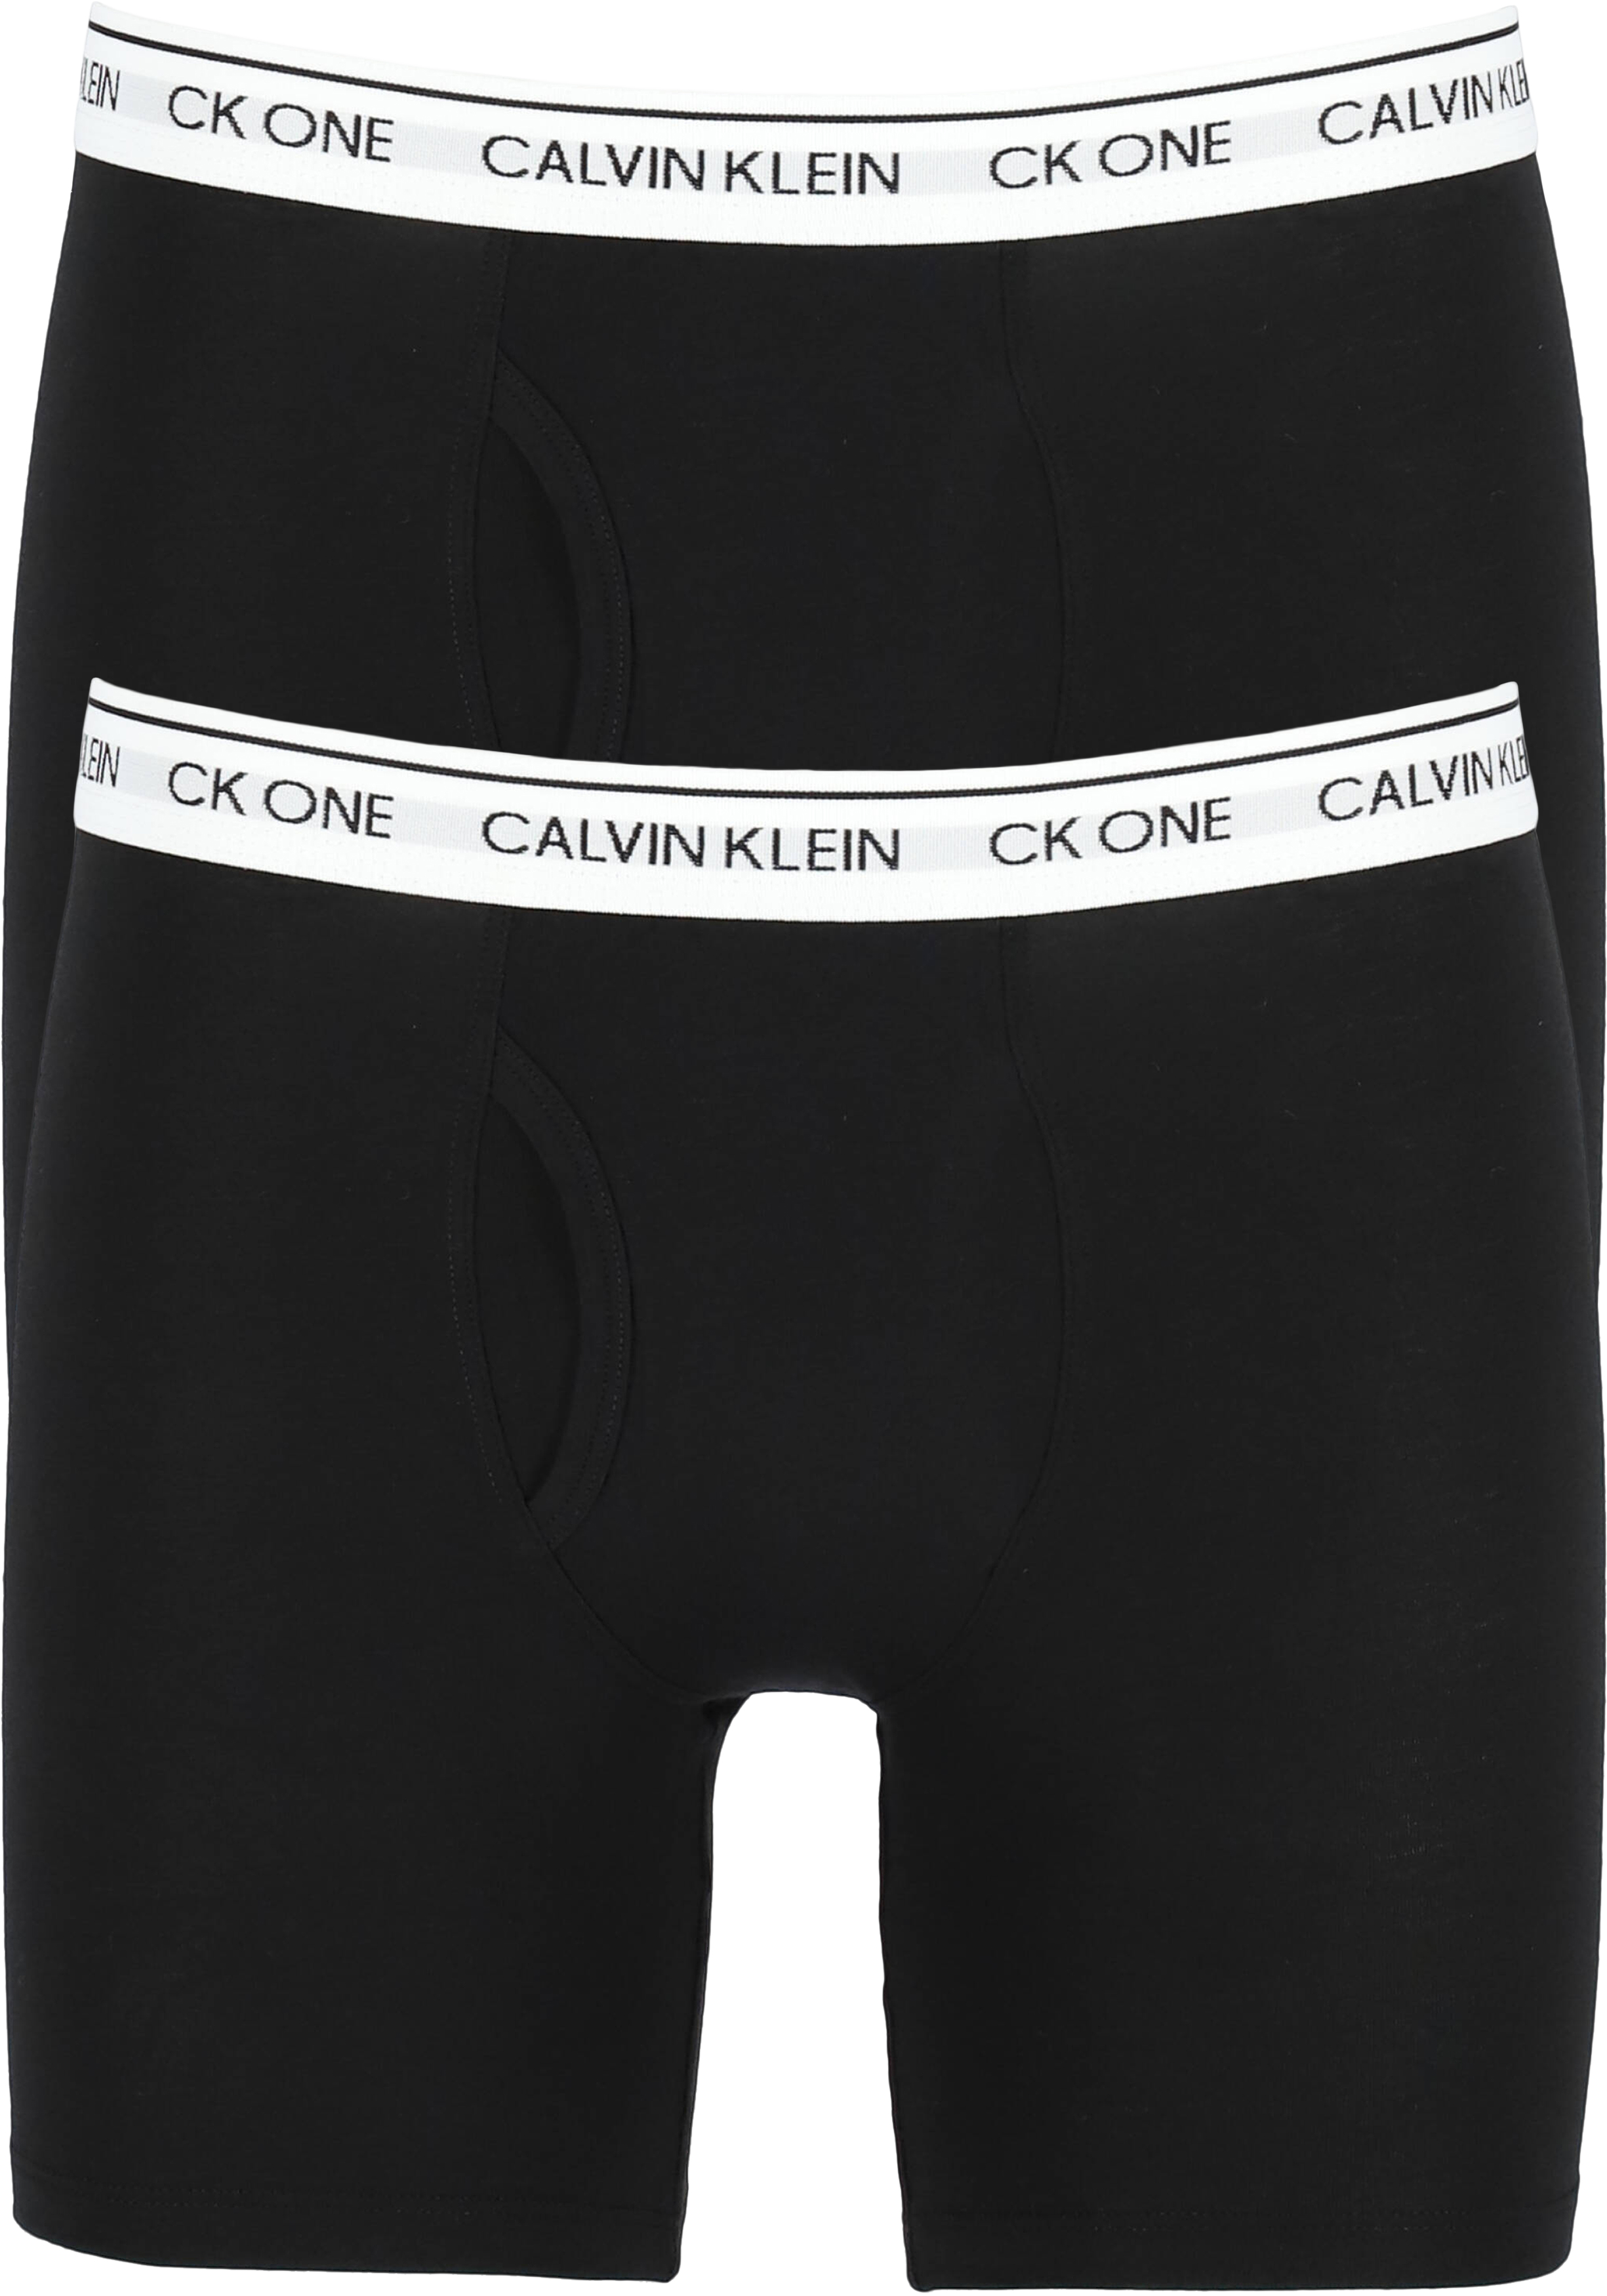 Moderniseren trainer Parameters Calvin Klein CK ONE Cotton boxer brief (2-pack), heren boxer lang met... -  SALE tot 70% korting